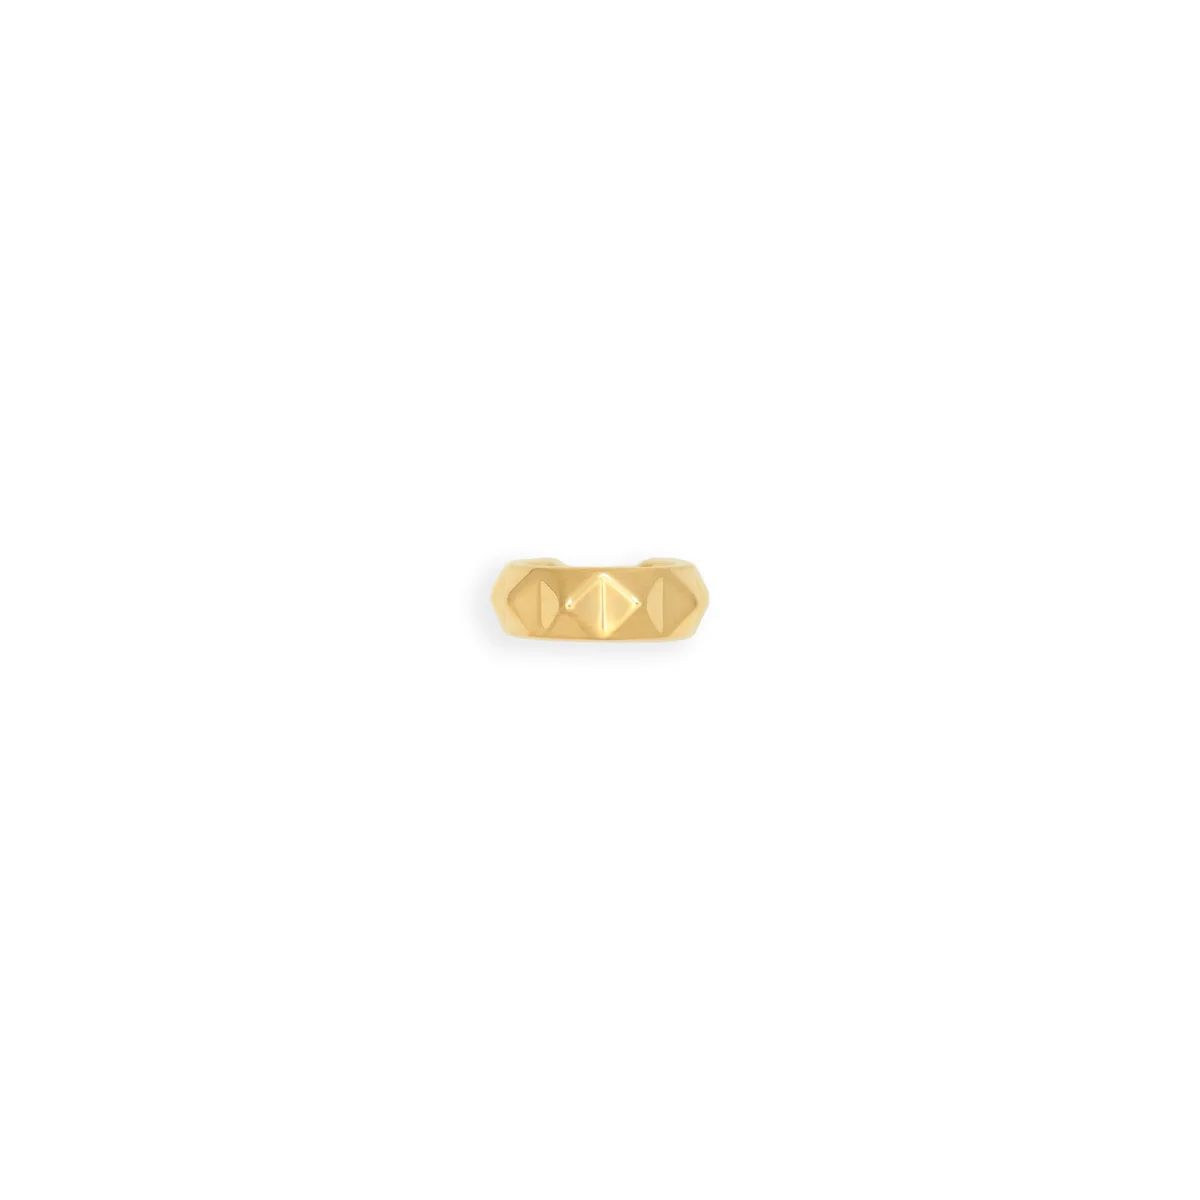 Pyramid Ear Cuff - Gold | Erin Fader Jewelry Design